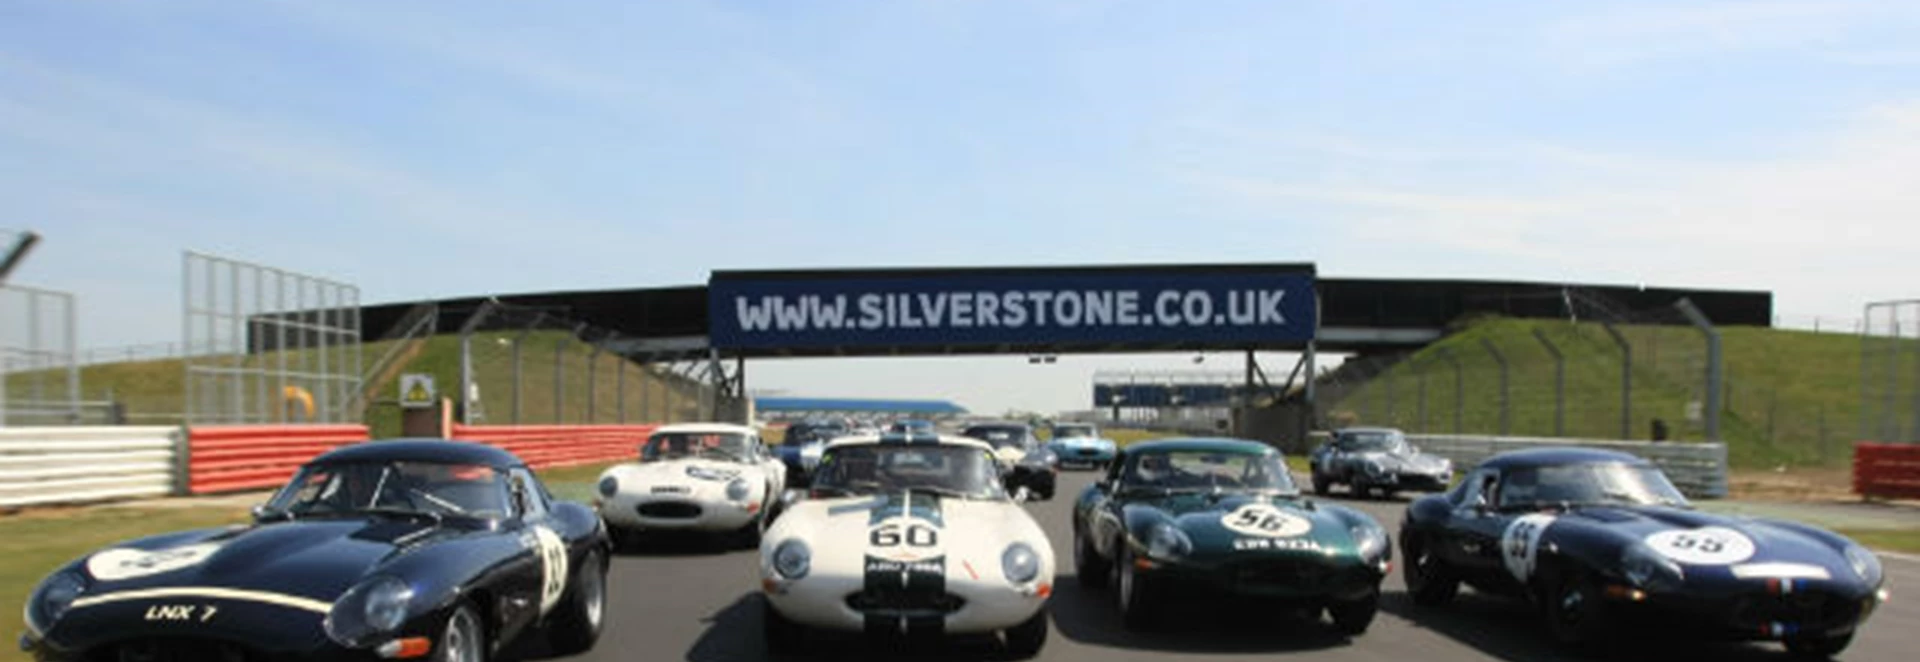 Jaguar Land Rover in talks to buy Silverstone circuit